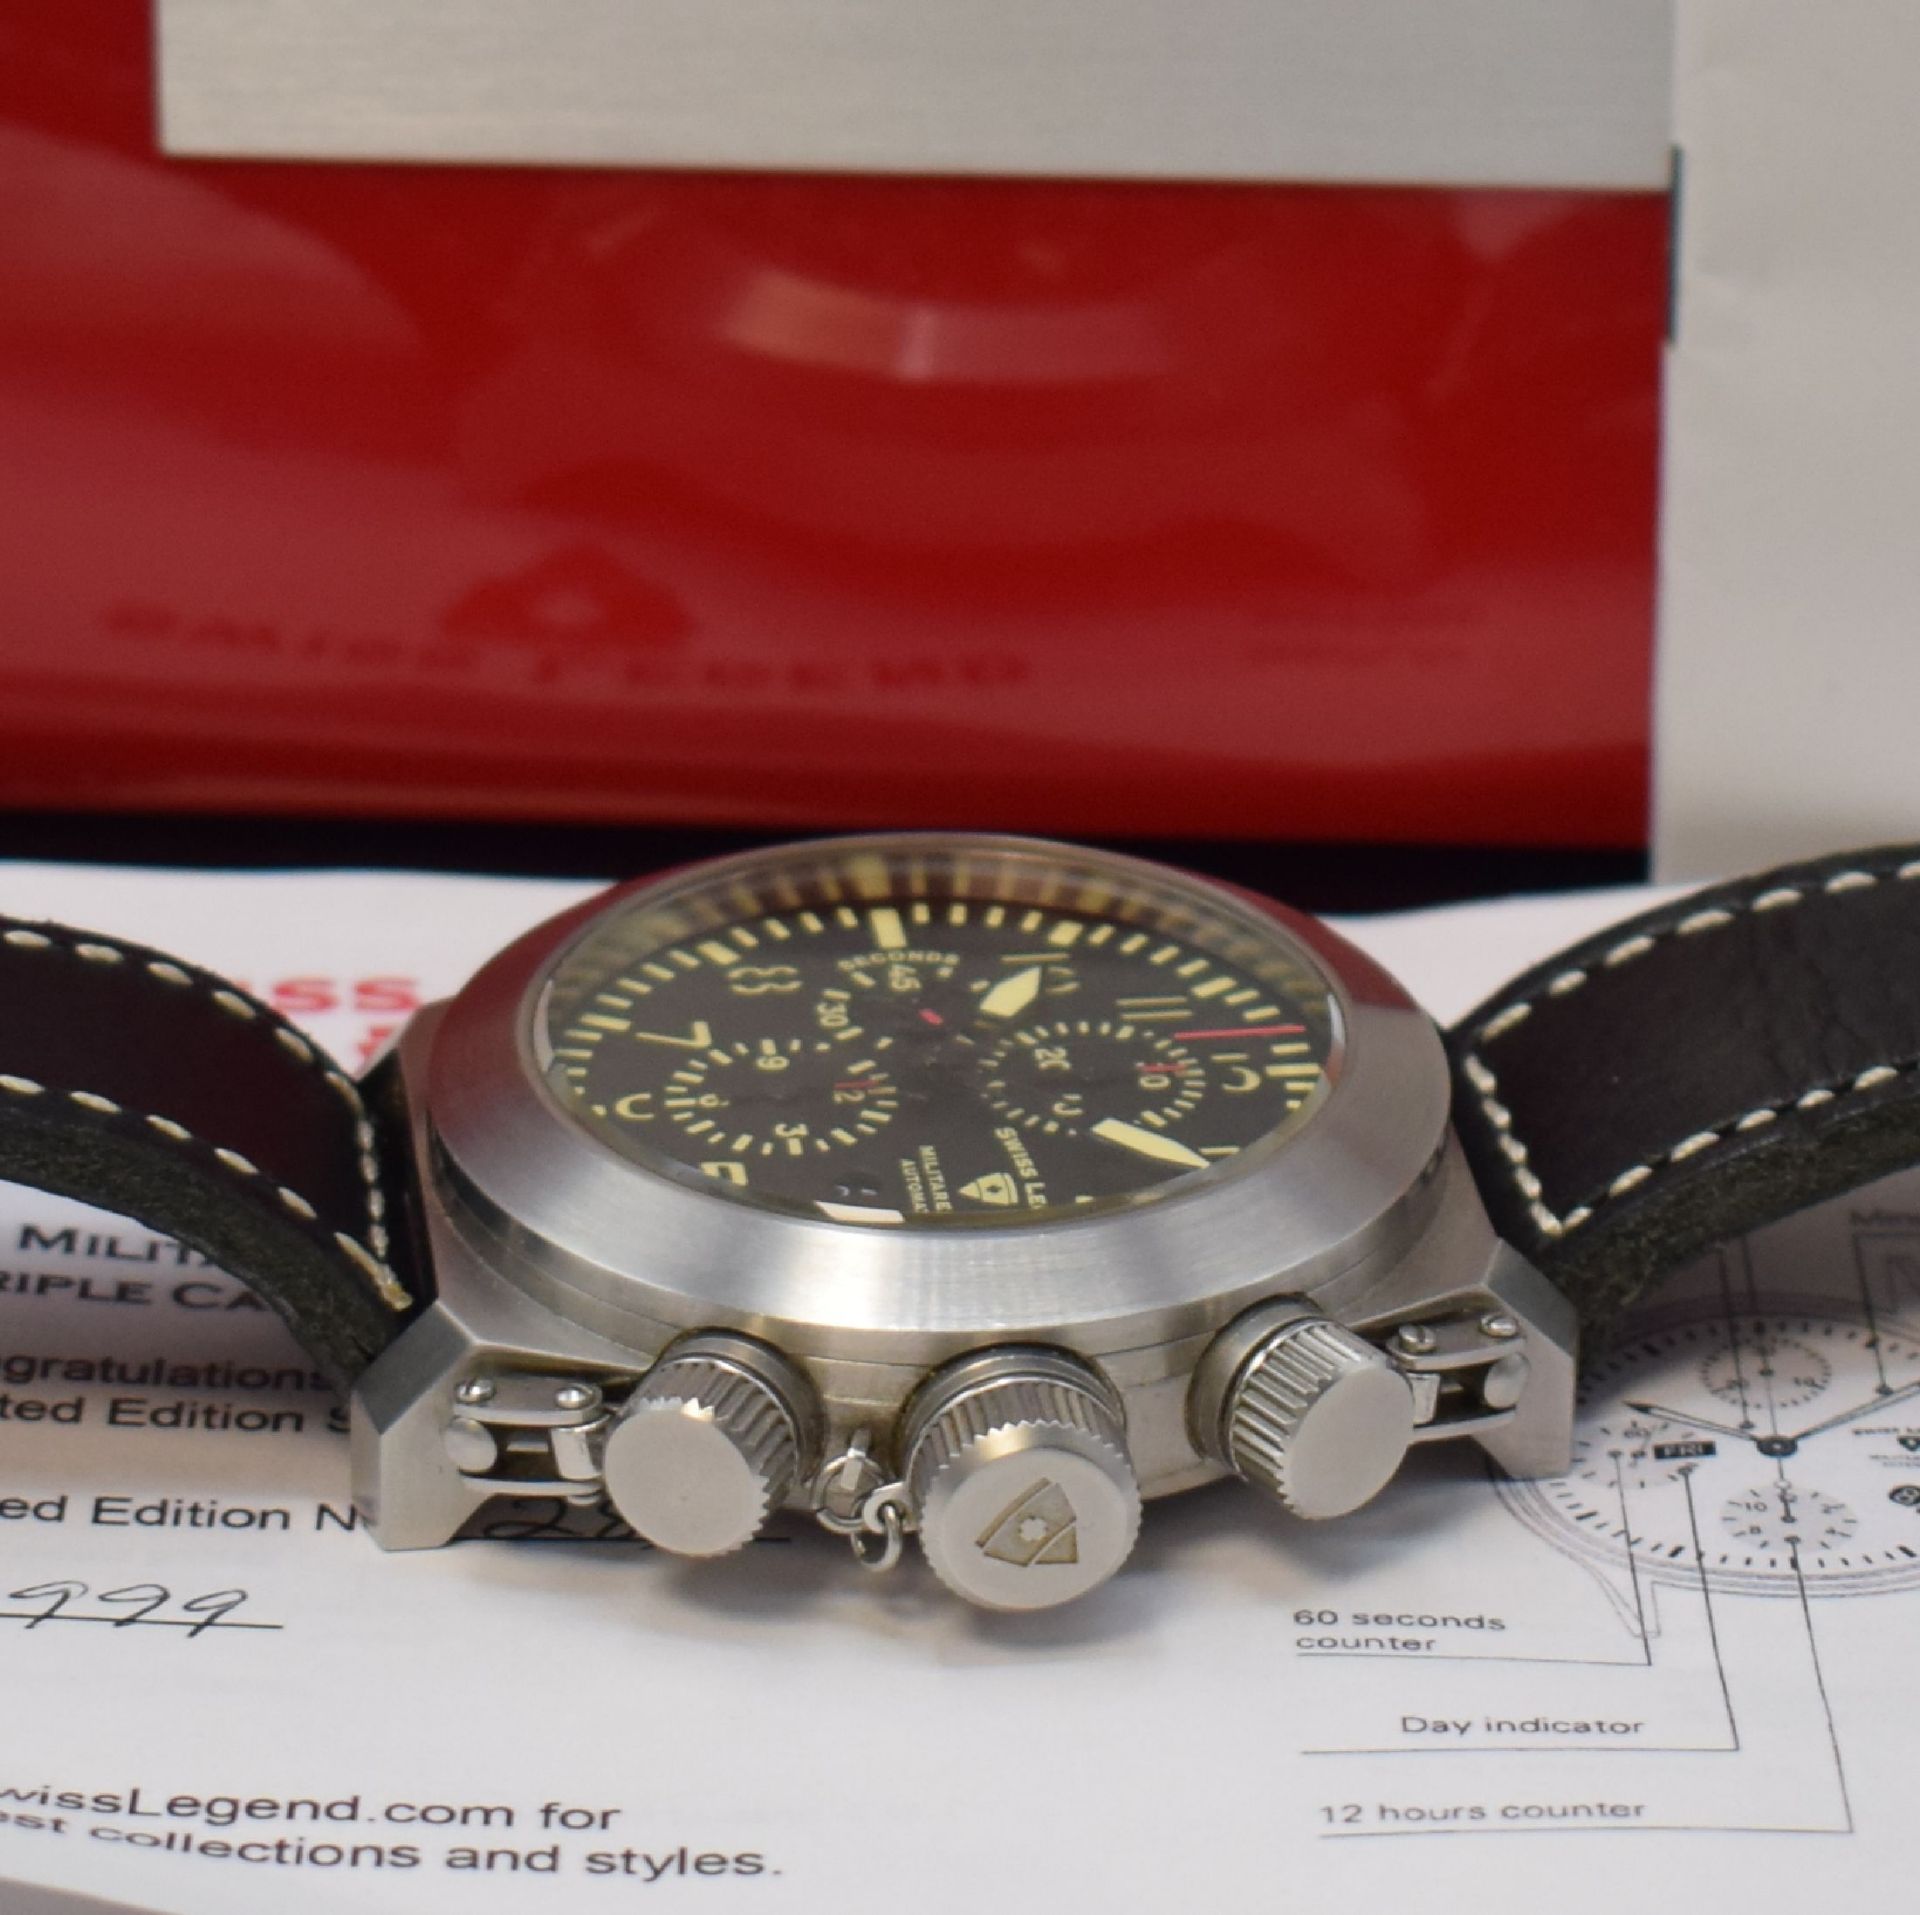 SWISS LEGEND auf 999 Stück limitierter Armbandchronograph - Image 3 of 5